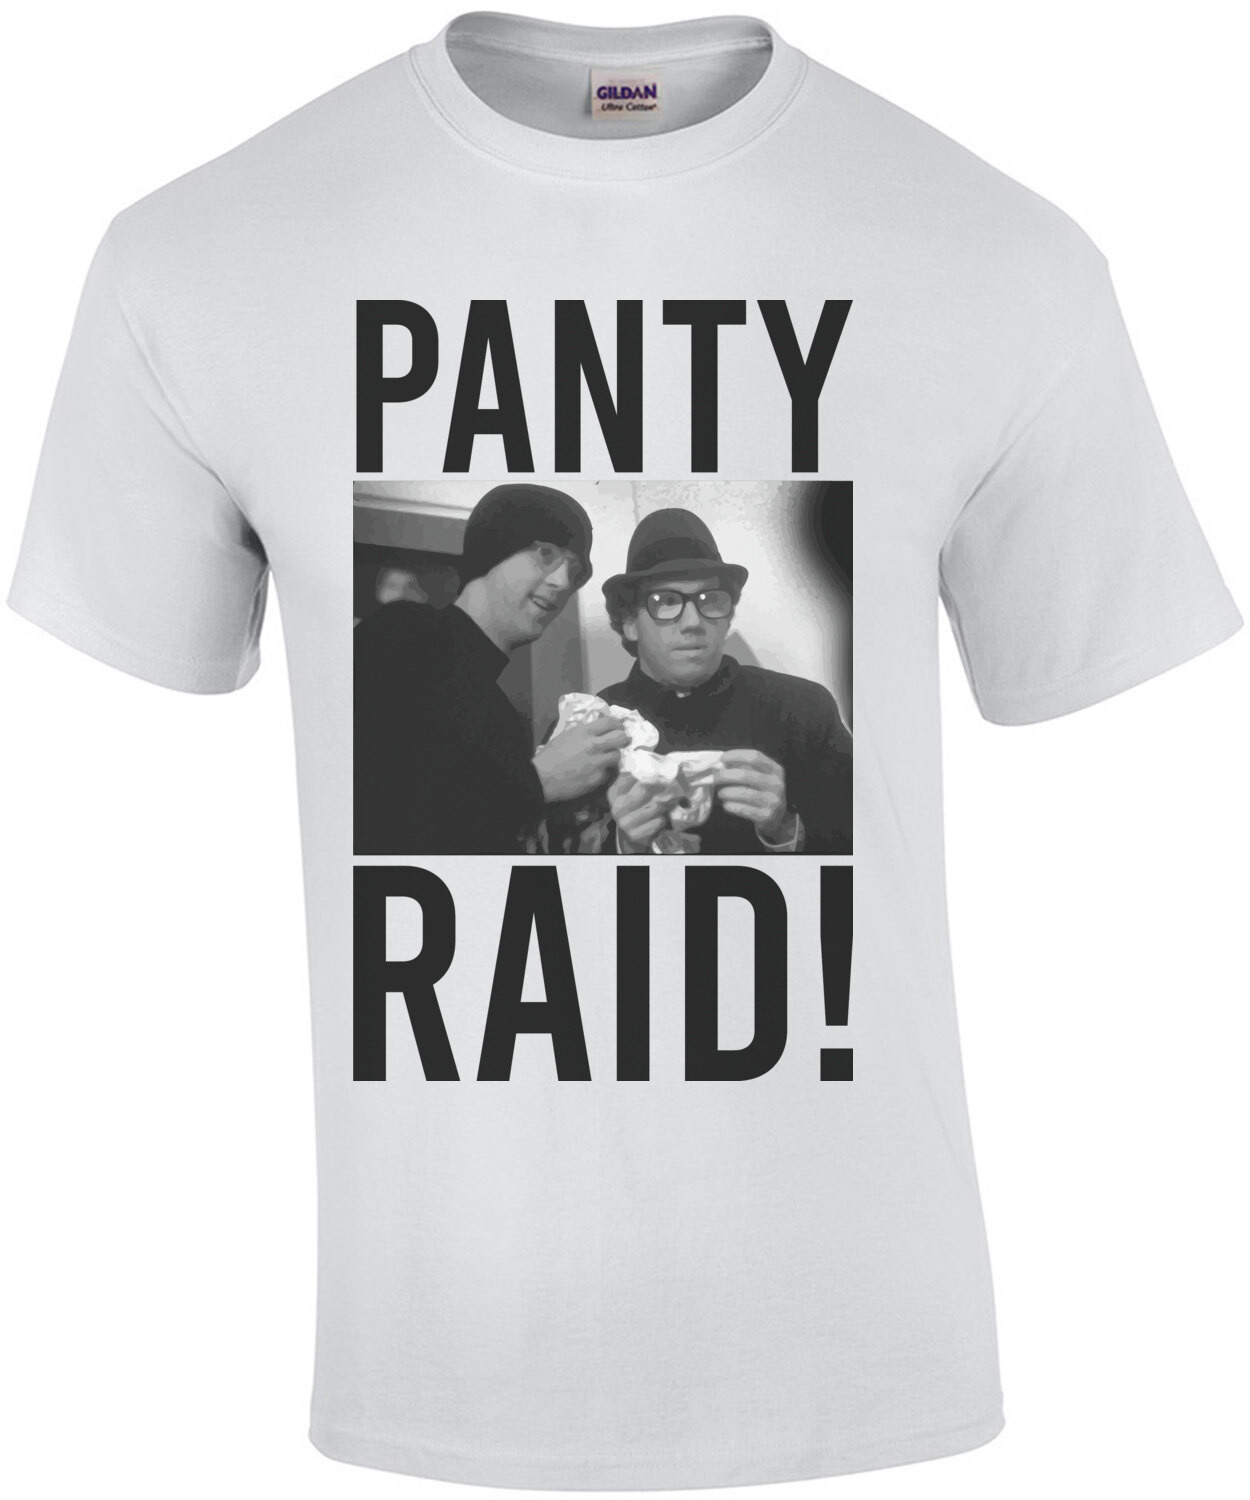 Panty Raid! - Revenge of the Nerds - 80's T-Shirt